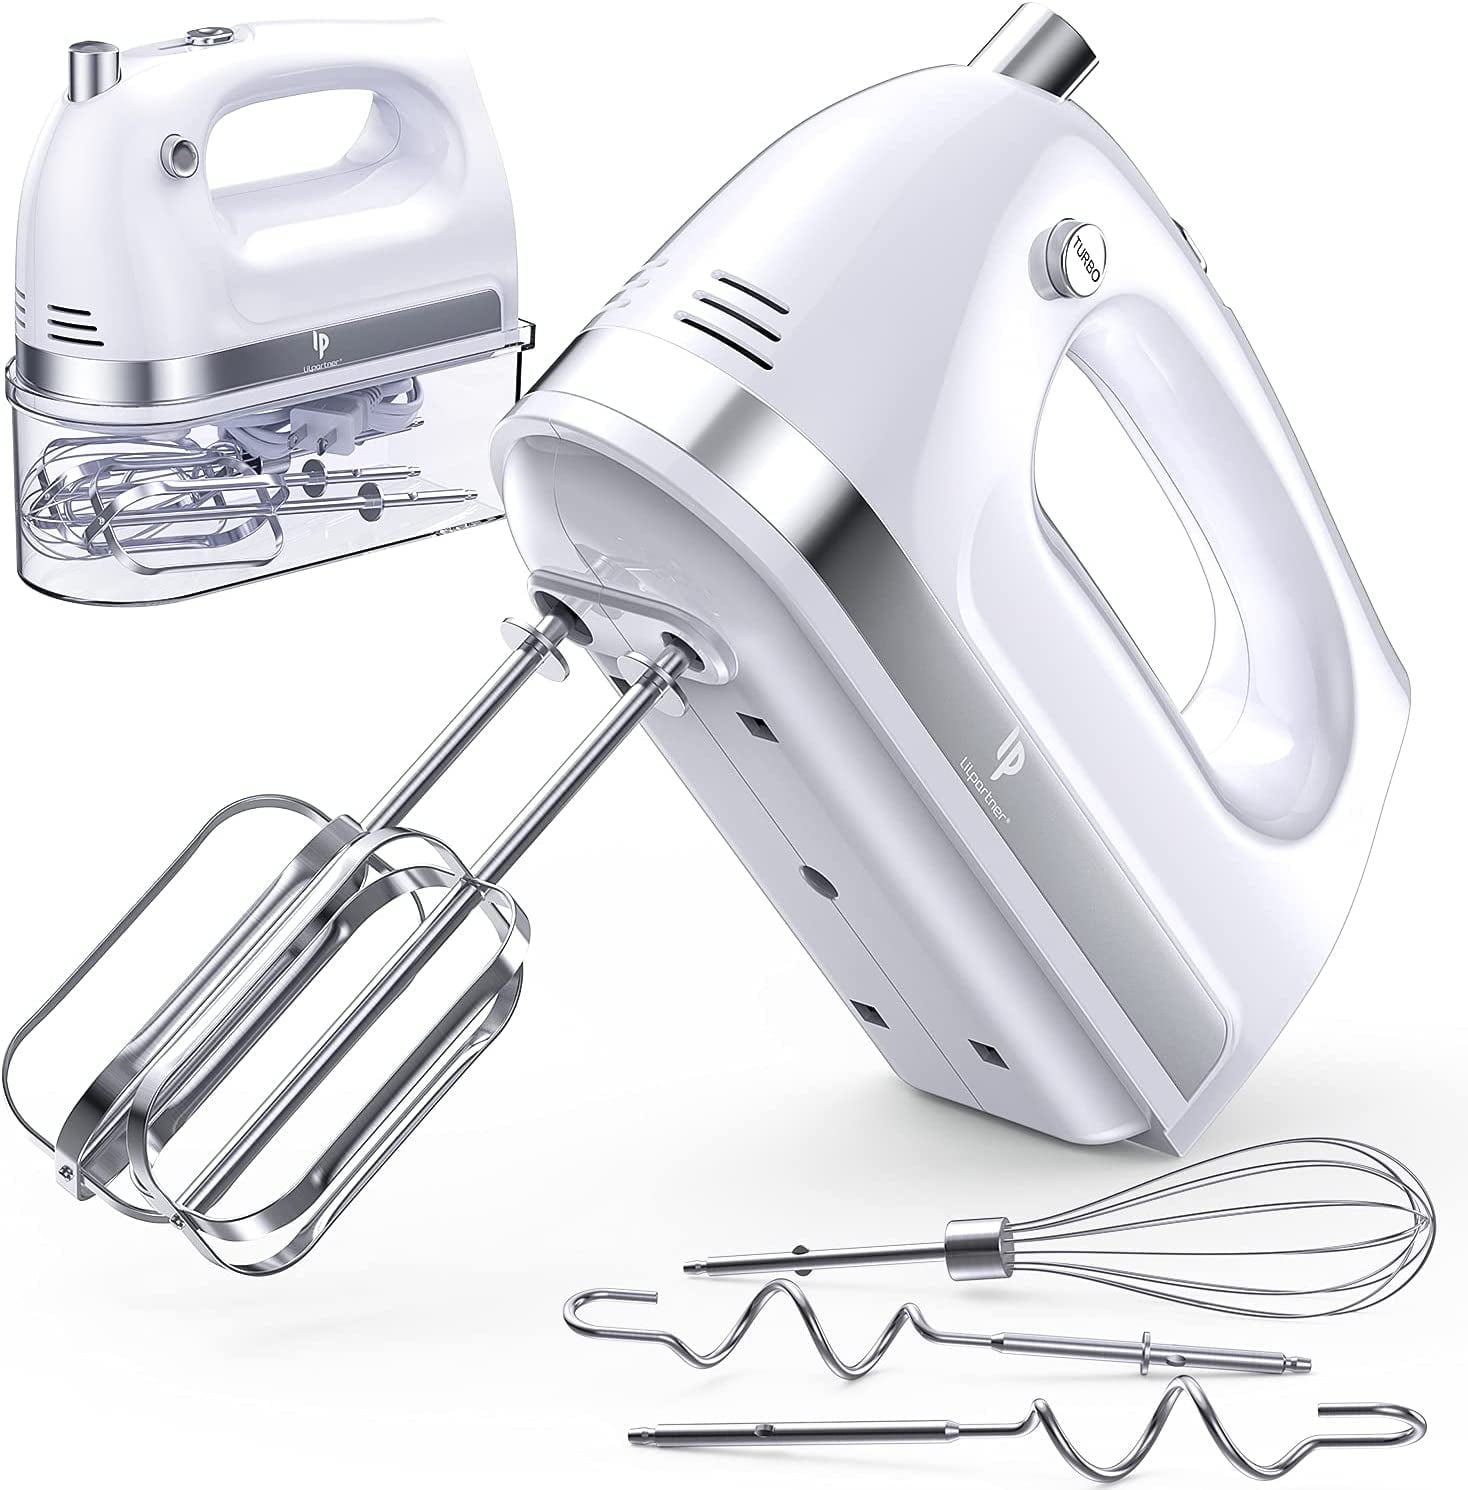 Buy Wholesale China Small Hand Mixer 250w Electric Kitchen Mixer